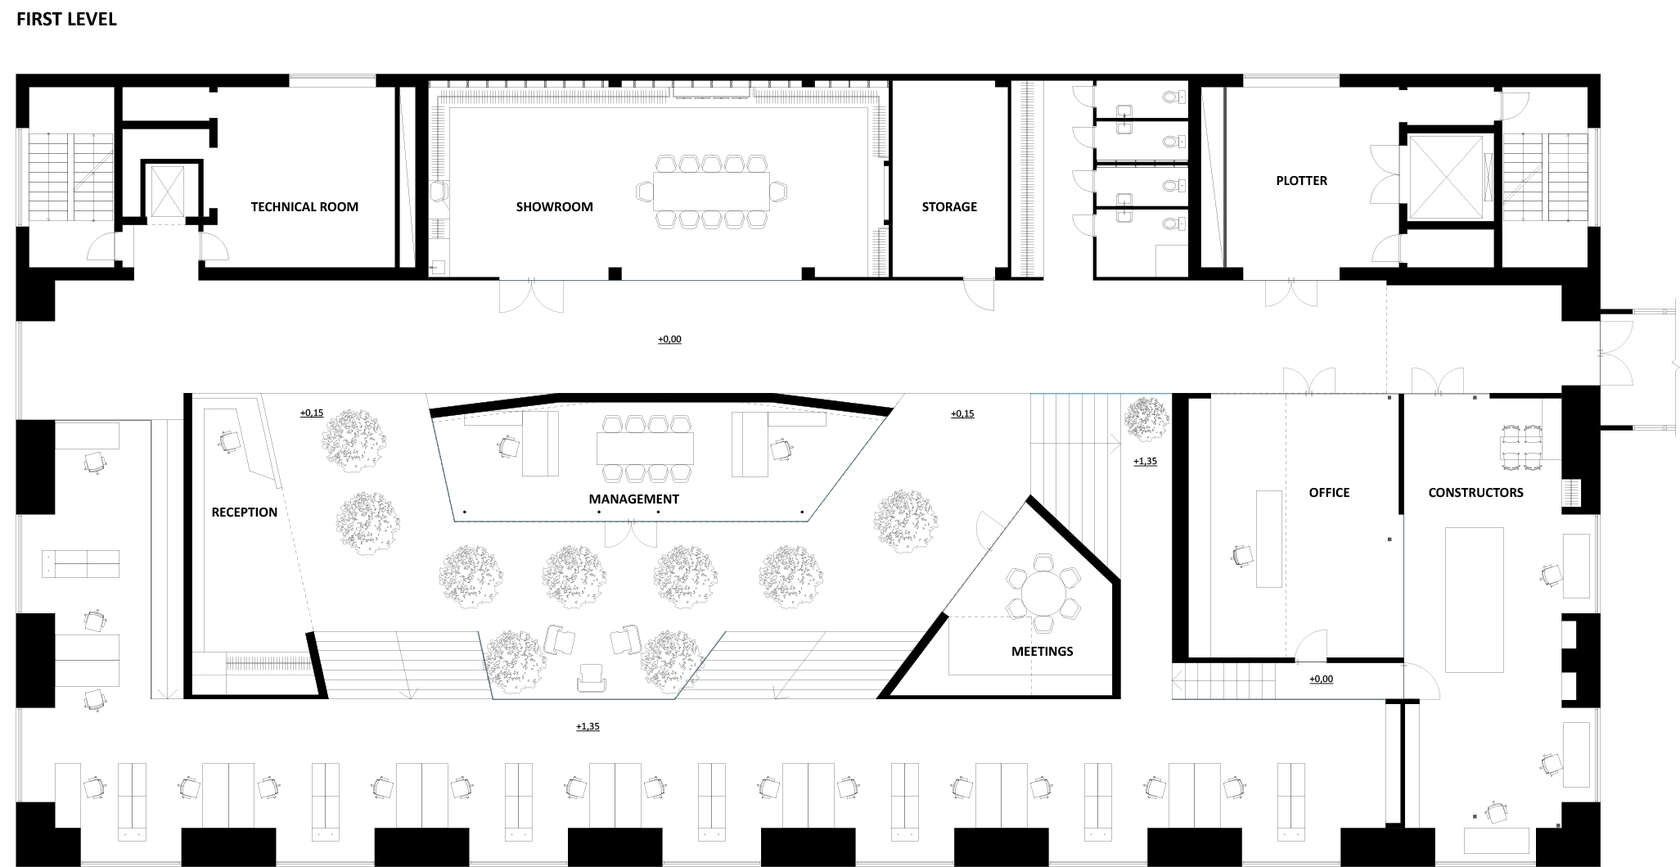 Z North Studio - Commercial & Residential Interior Design - Office - zn-s (76).jpg